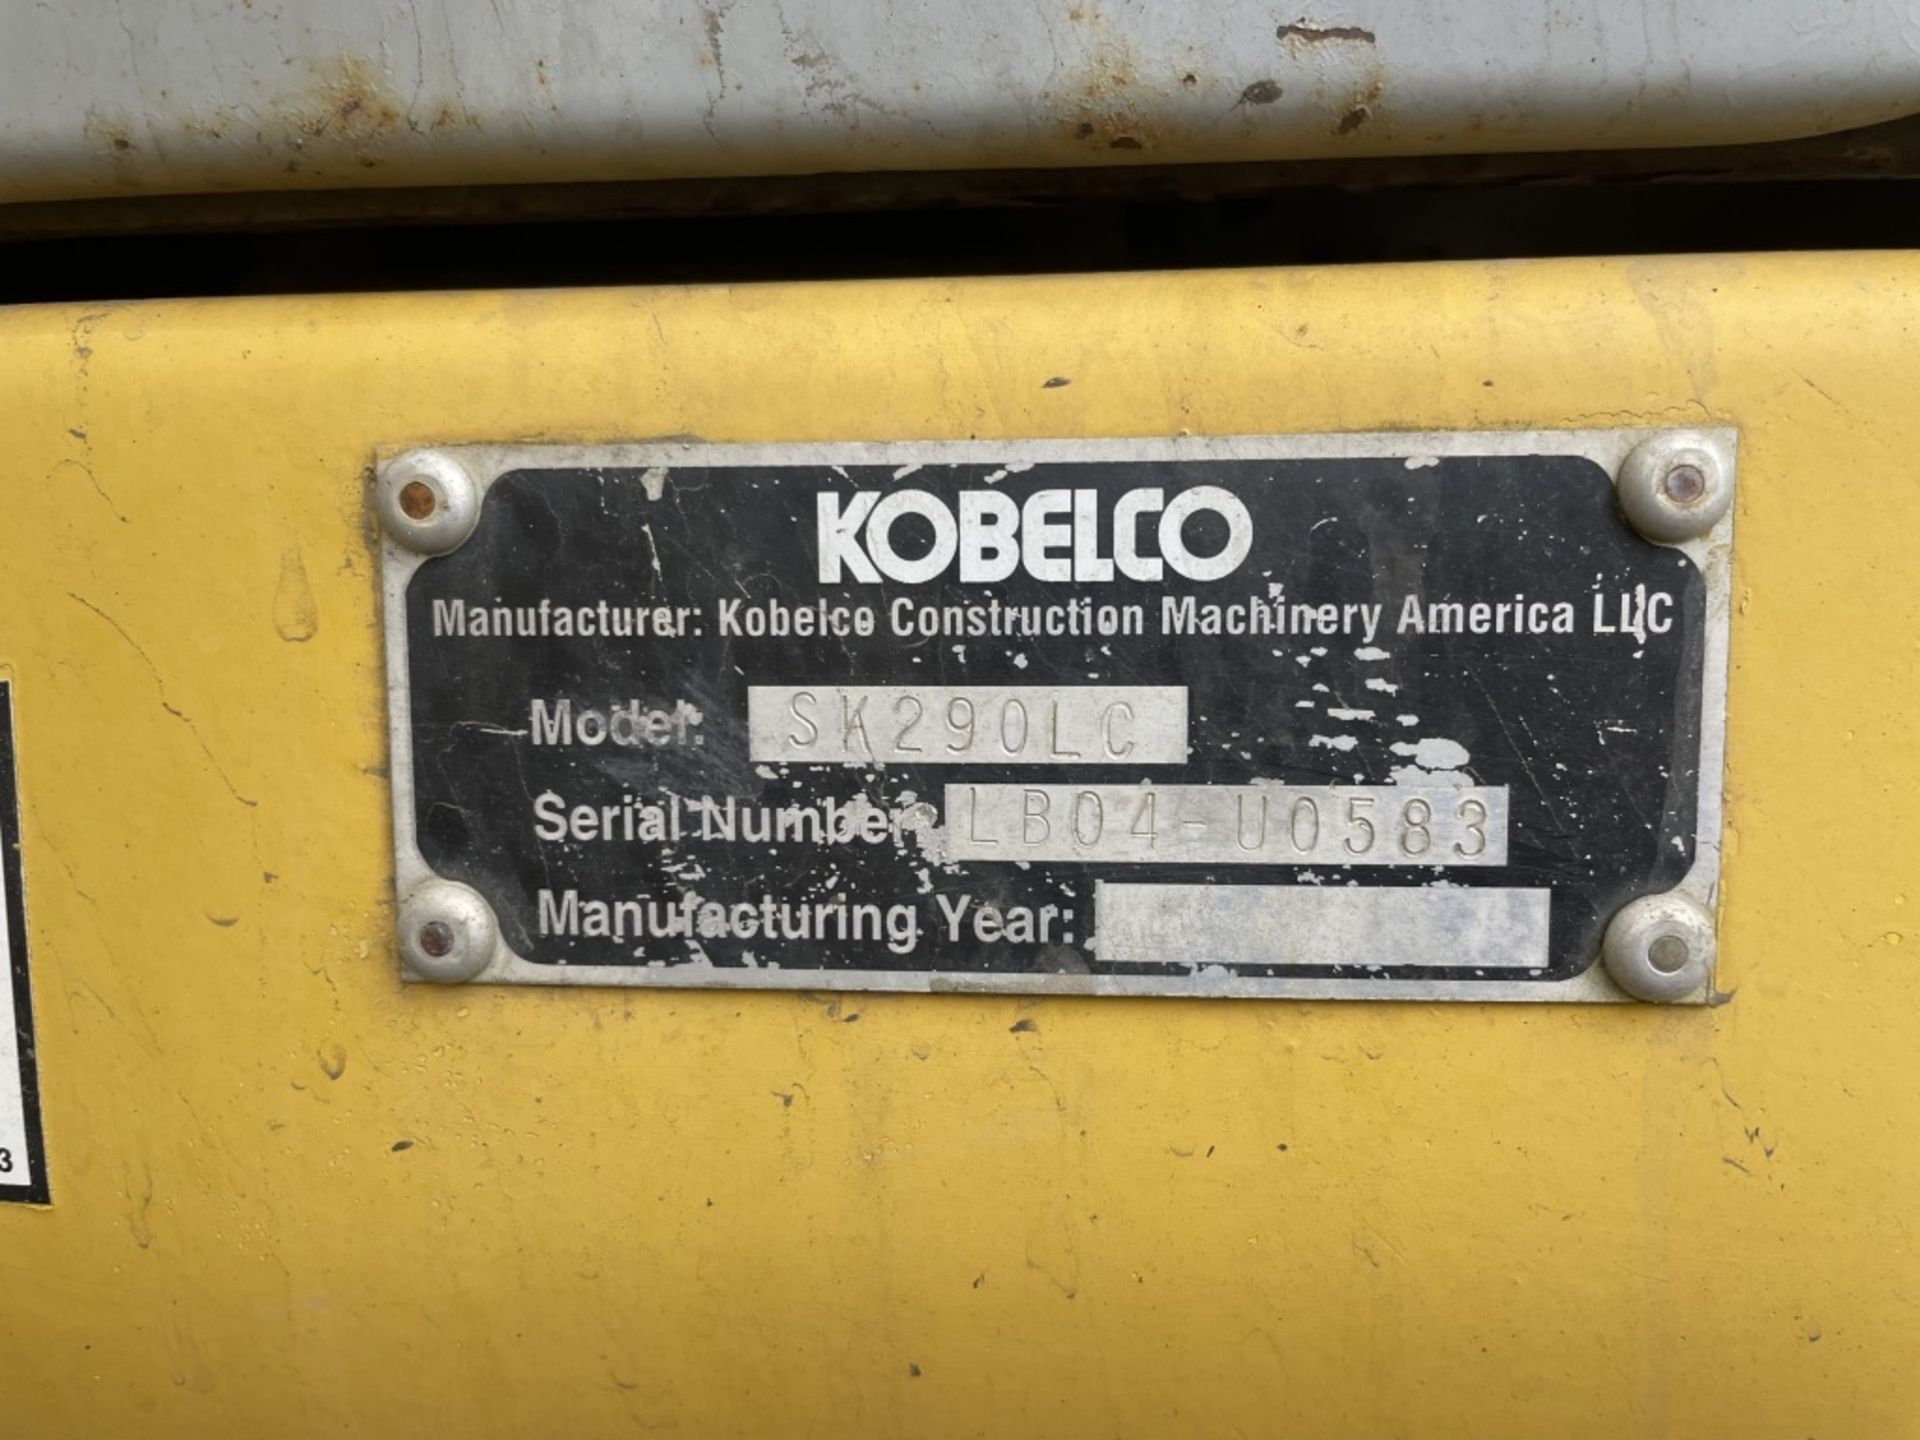 2006 Kobelco SK290LC Hydraulic Excavator - Image 17 of 41